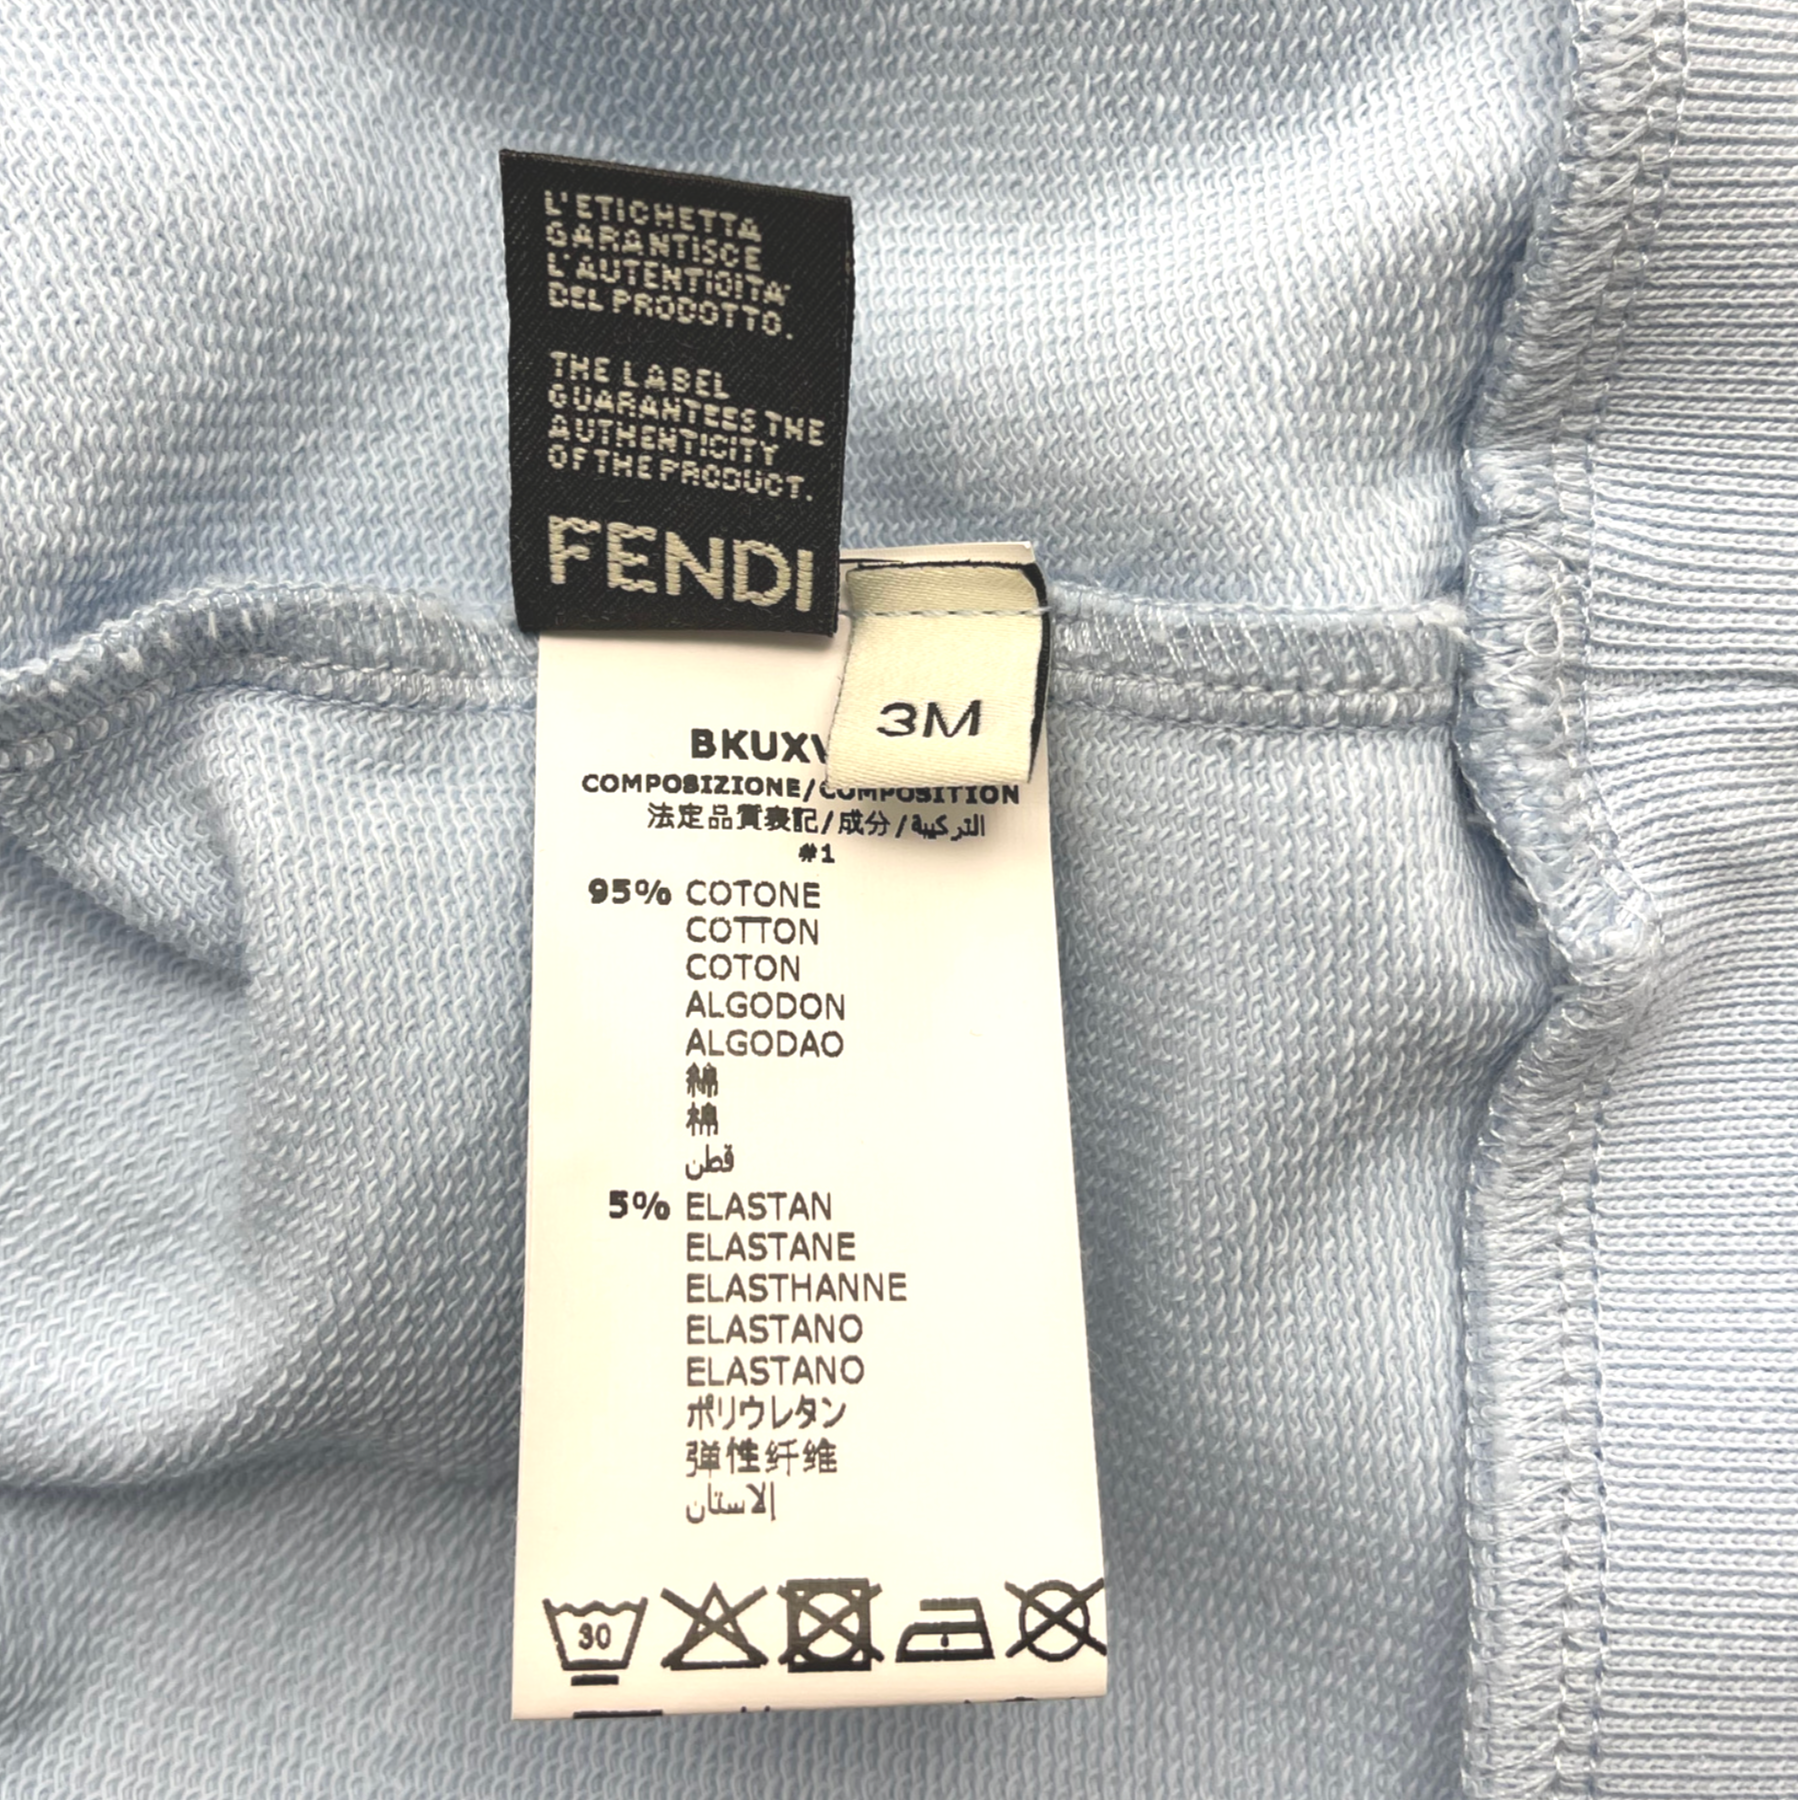 FENDI - "Fantastic summer colours" sweatshirt - 3 months